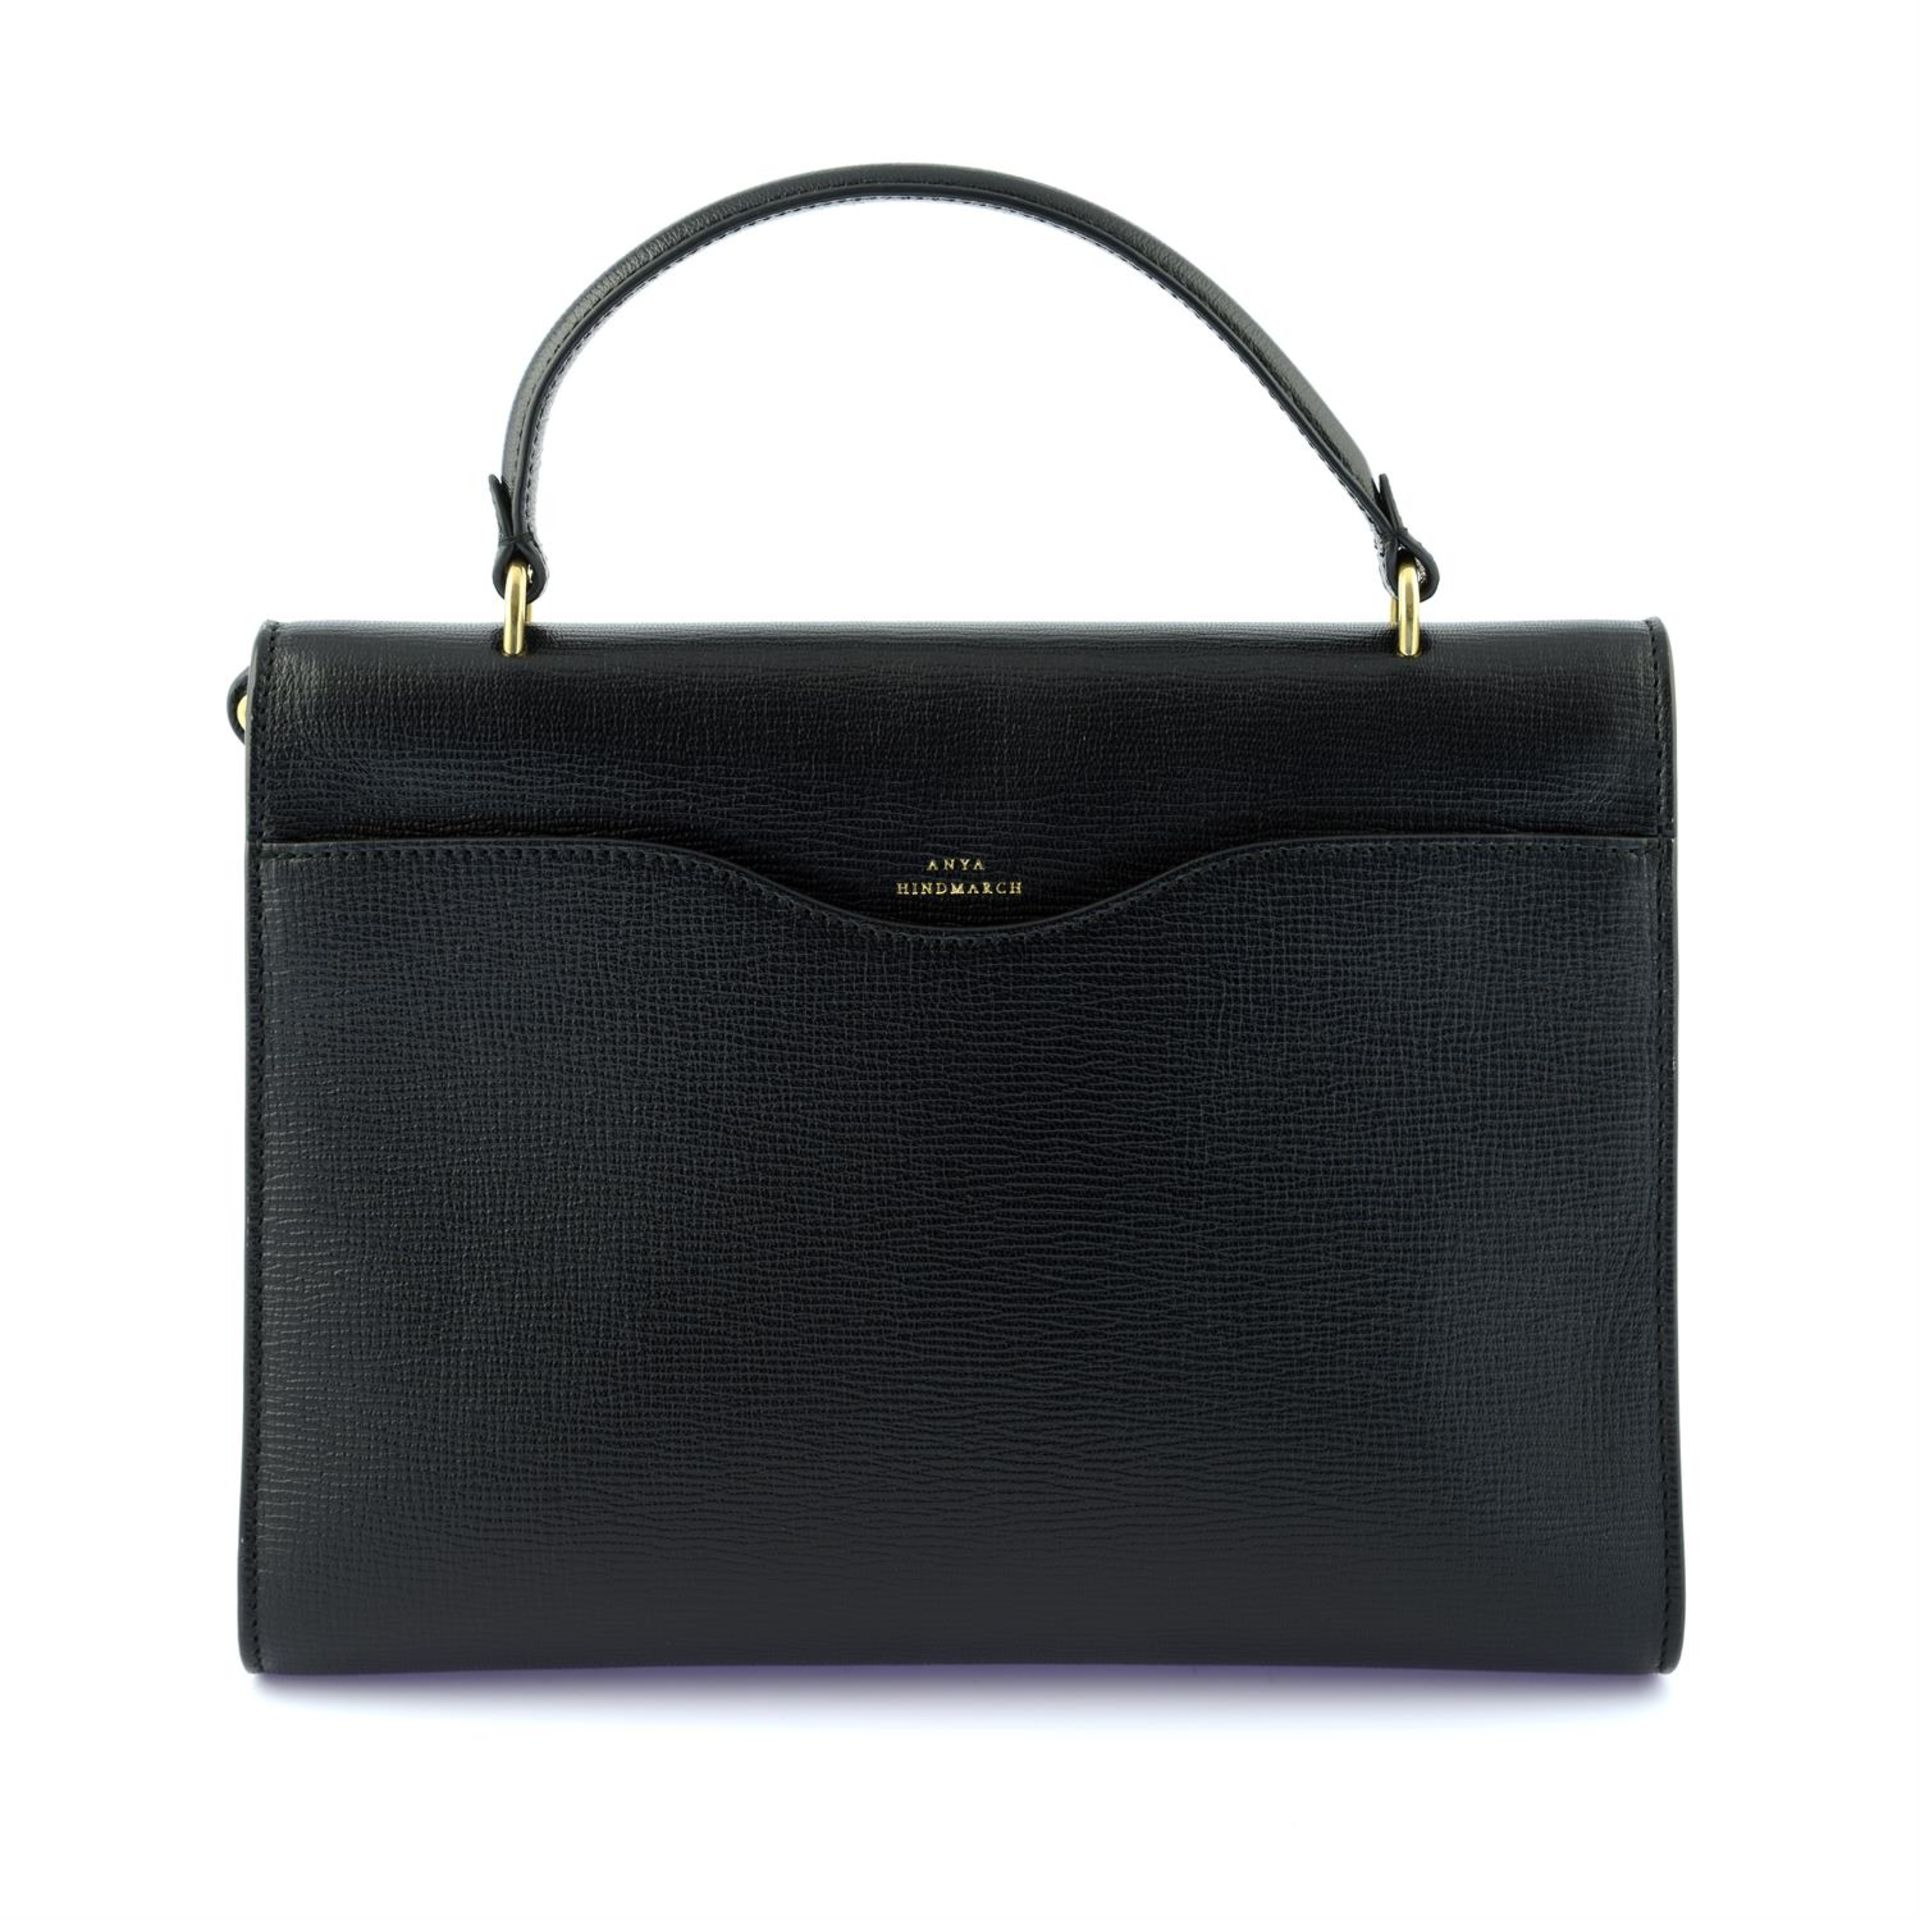 ANYA HINDMARCH - a black leather handbag. - Image 2 of 5